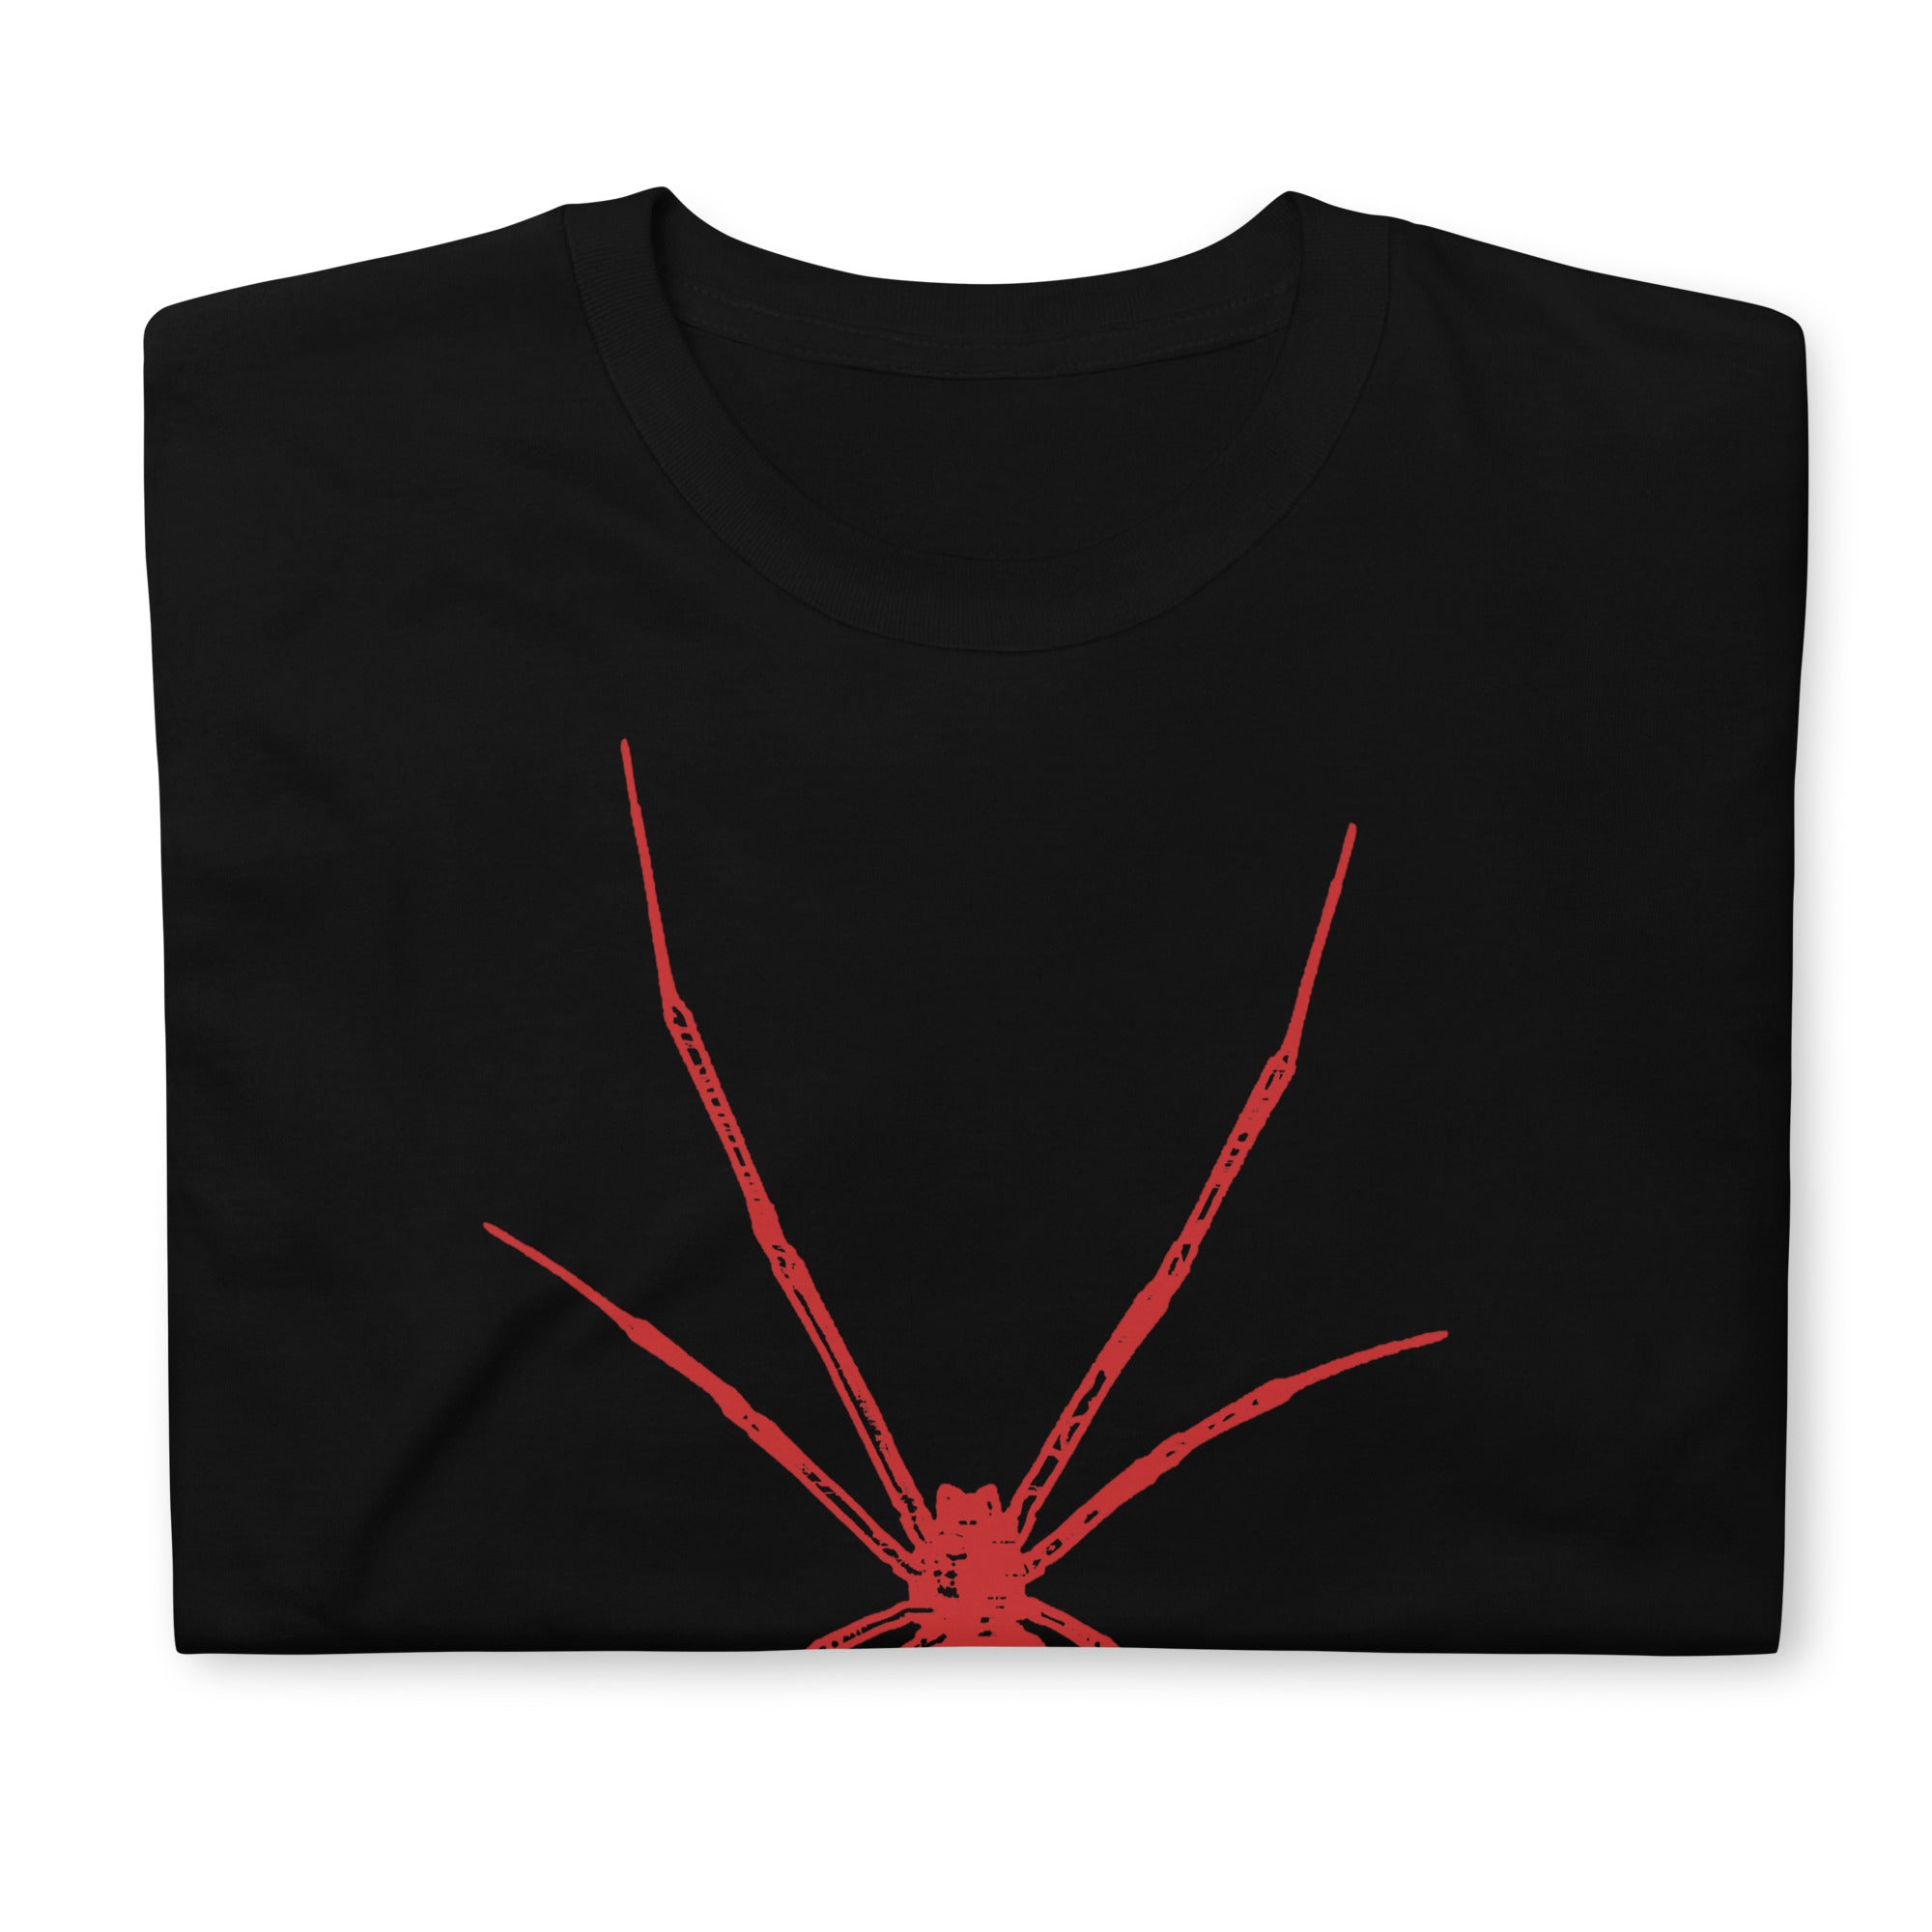 Red Creepy Spider Arachnid Black Widow Men's Short Sleeve T-Shirt - Edge of Life Designs